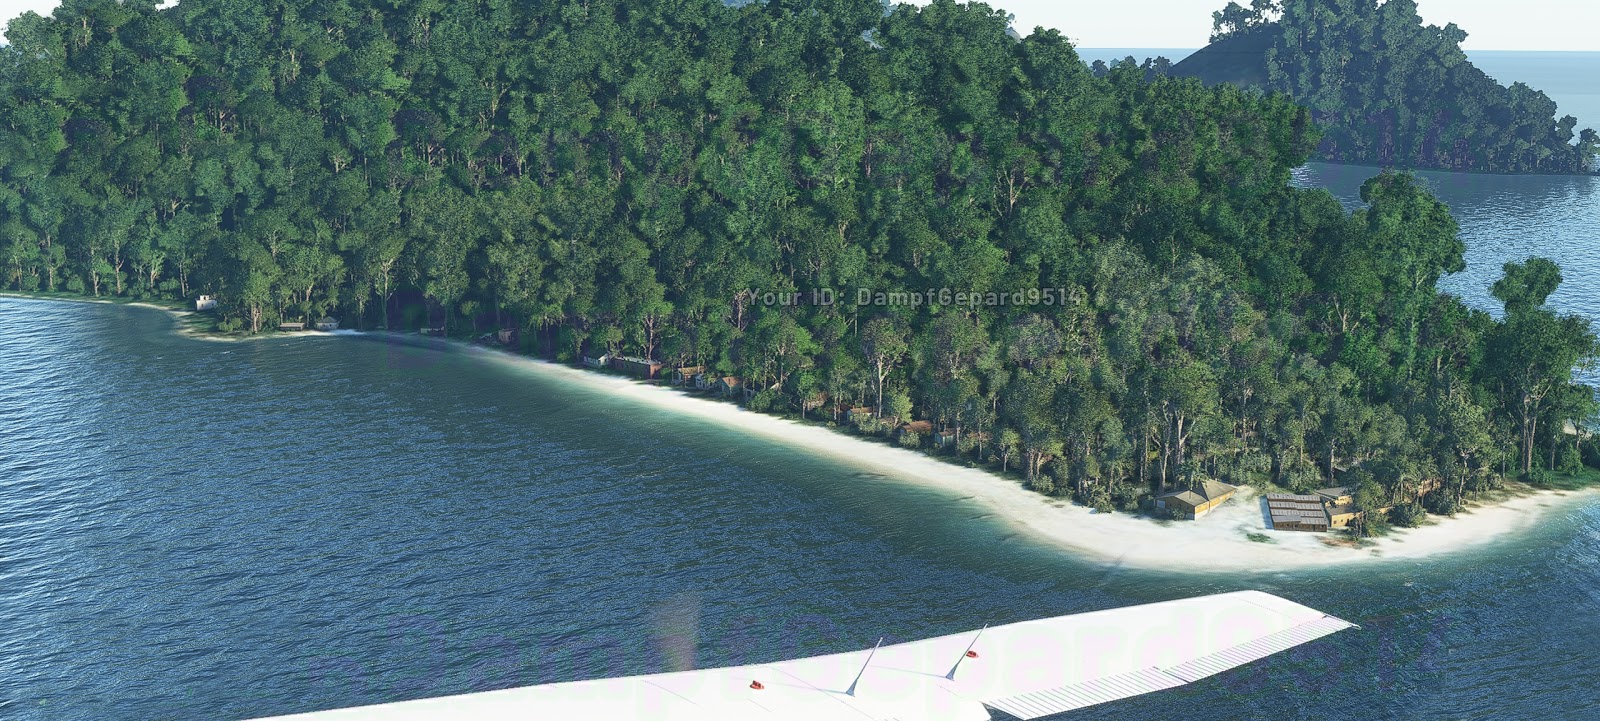 Palawan-El-Nido-Pangulasian-Island-1.jpg